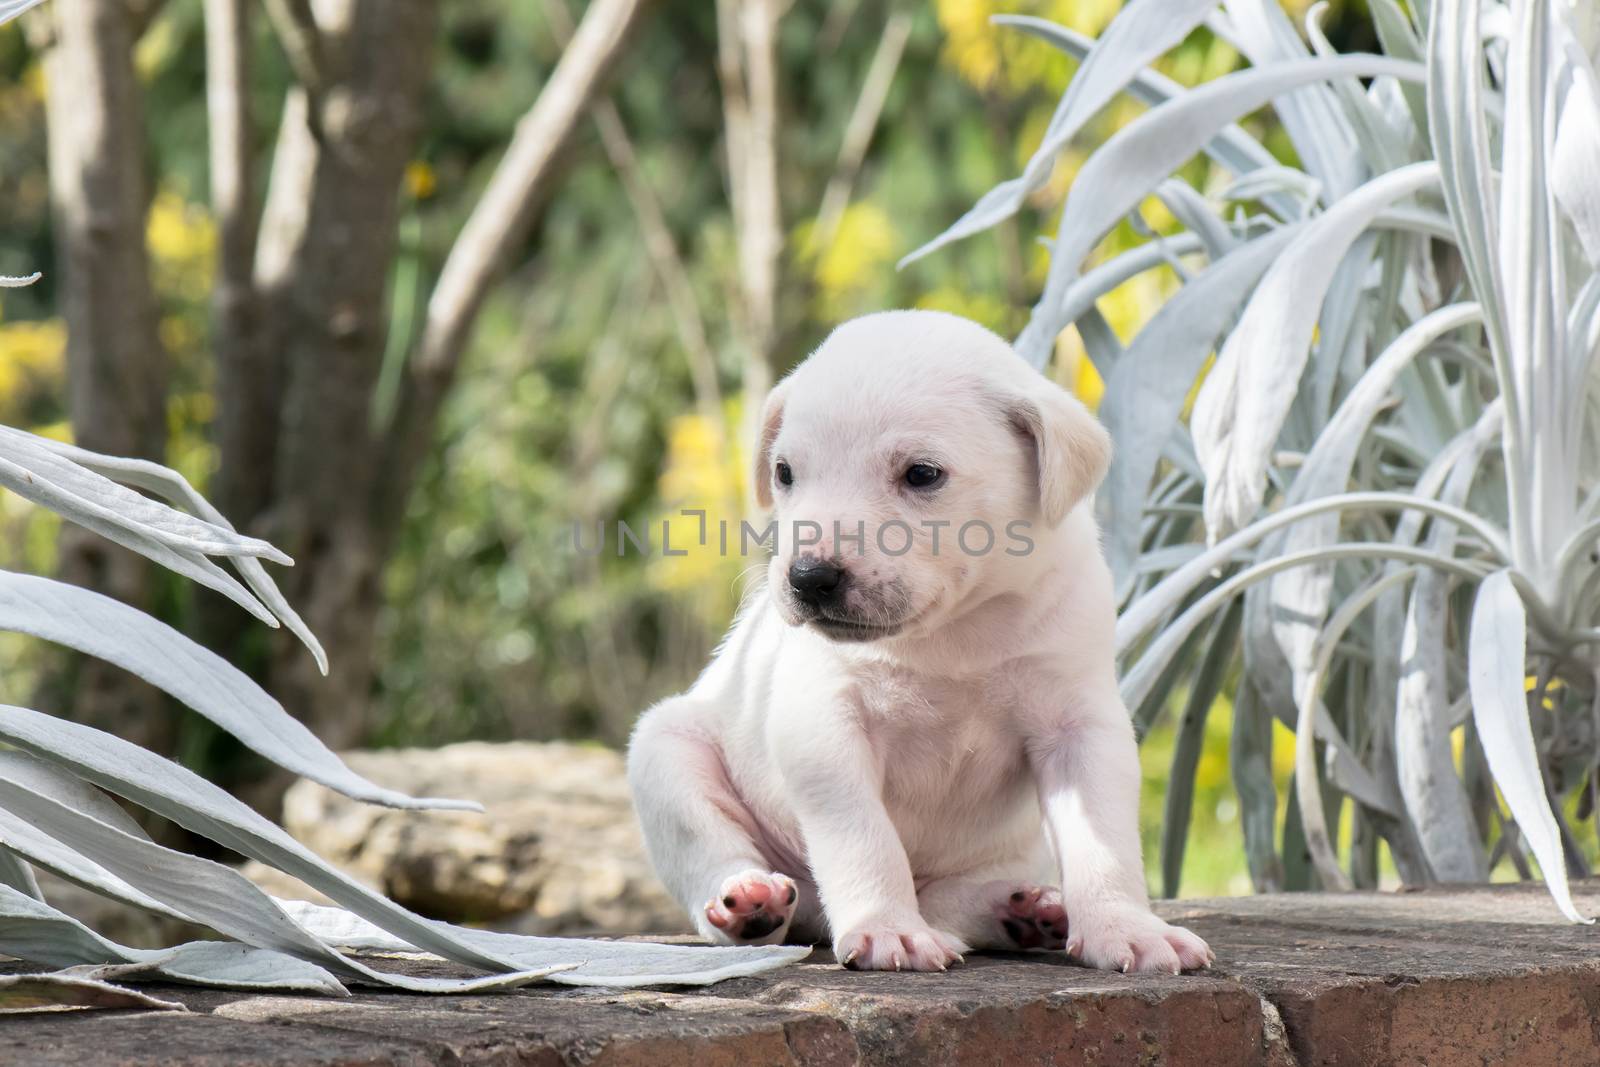 Little Puppy in the garden  by dalomo84